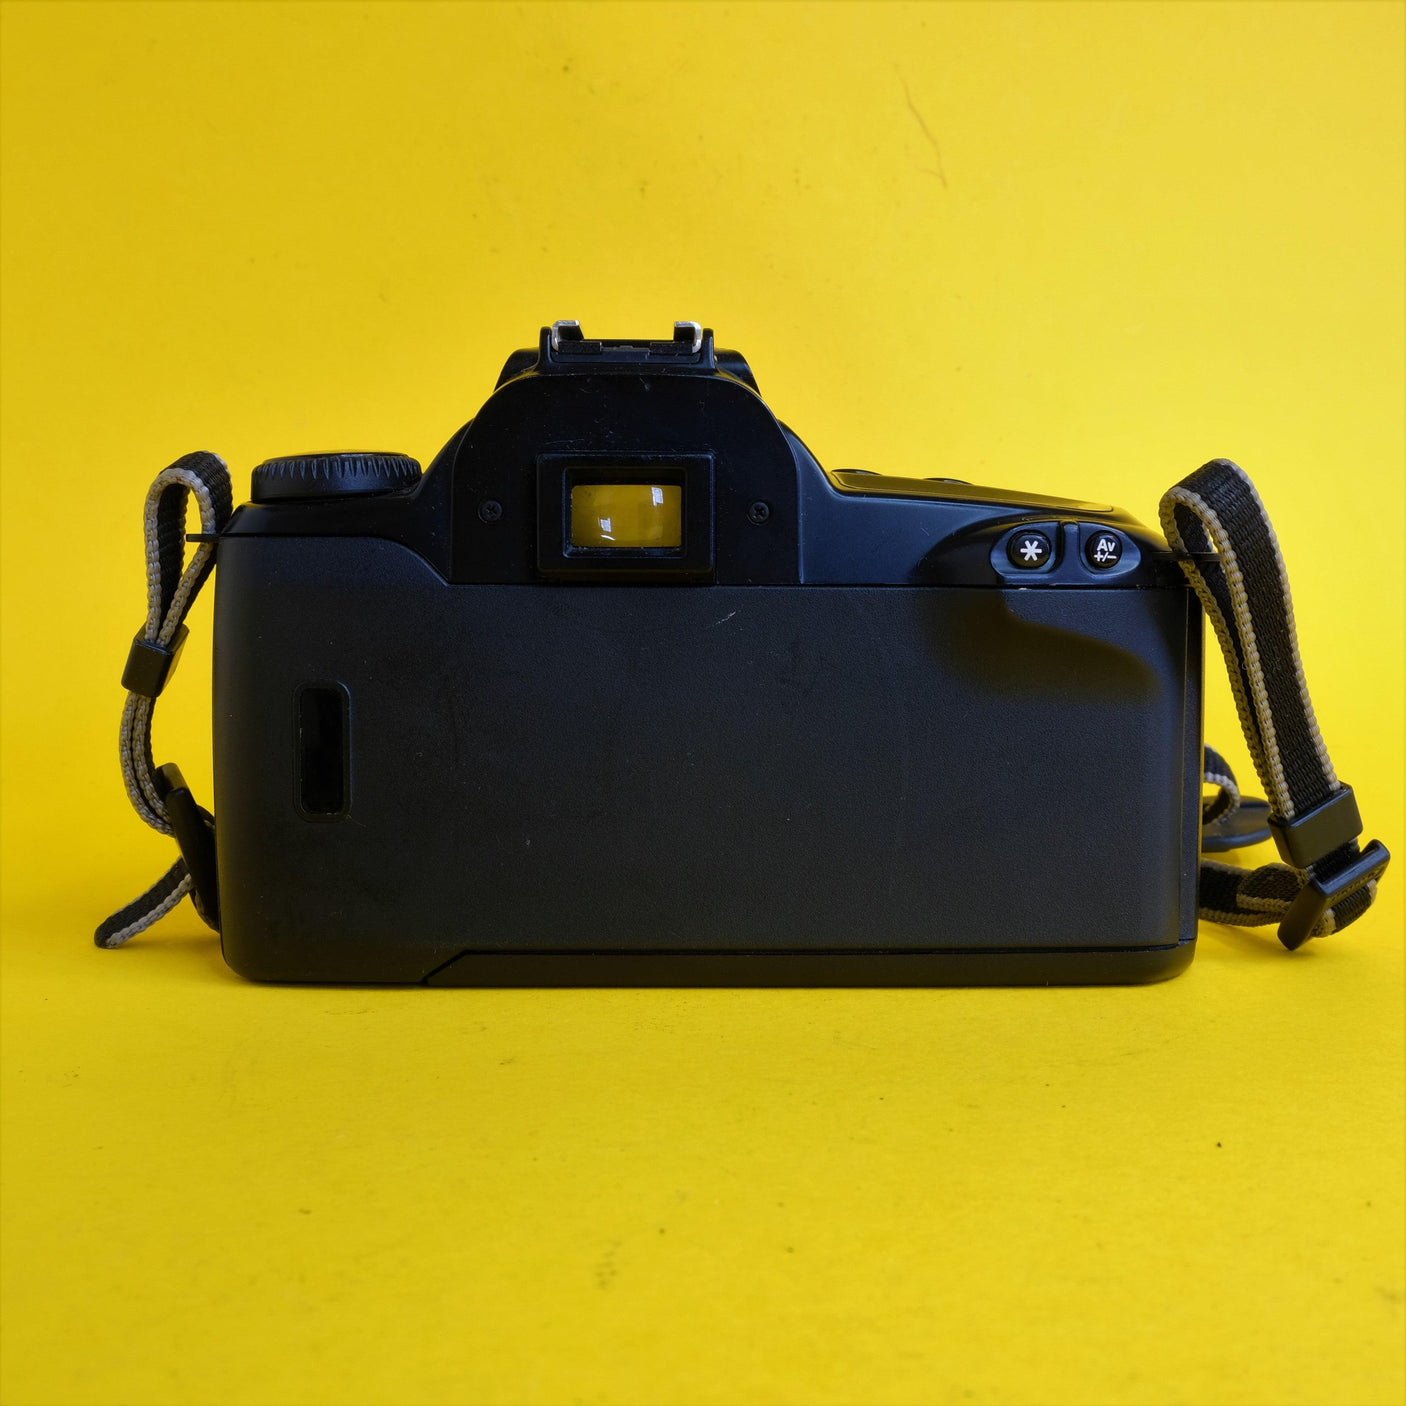 Canon EOS 3000 35mm SLR Film Camera with Canon Prime Lens